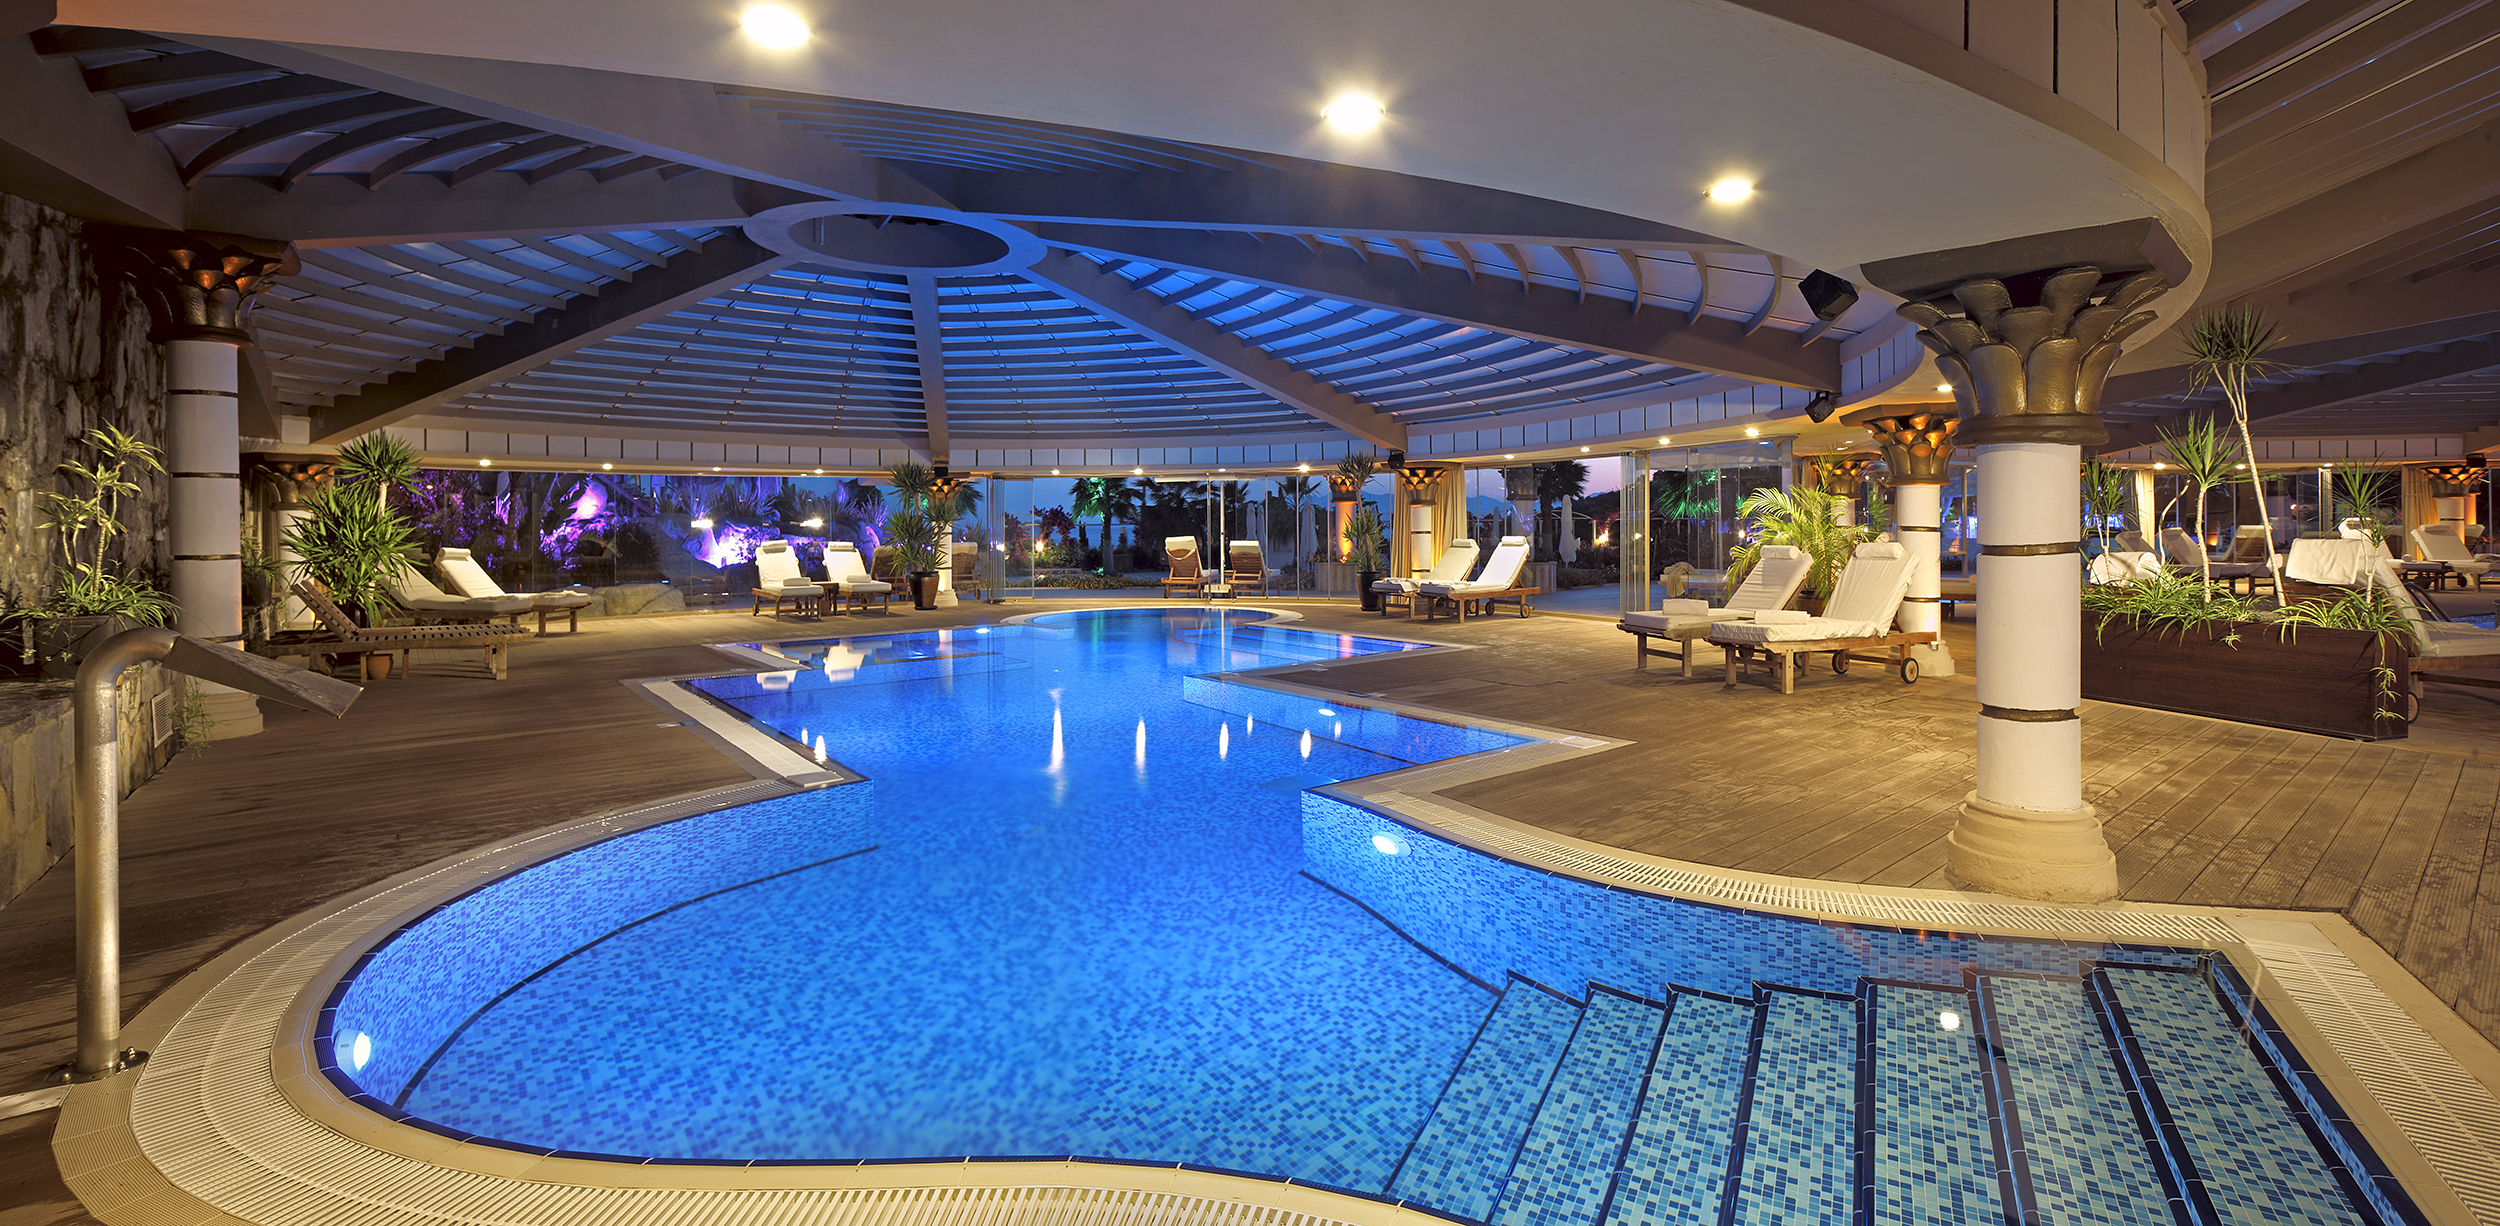 Sianji Well-Being Resort pool